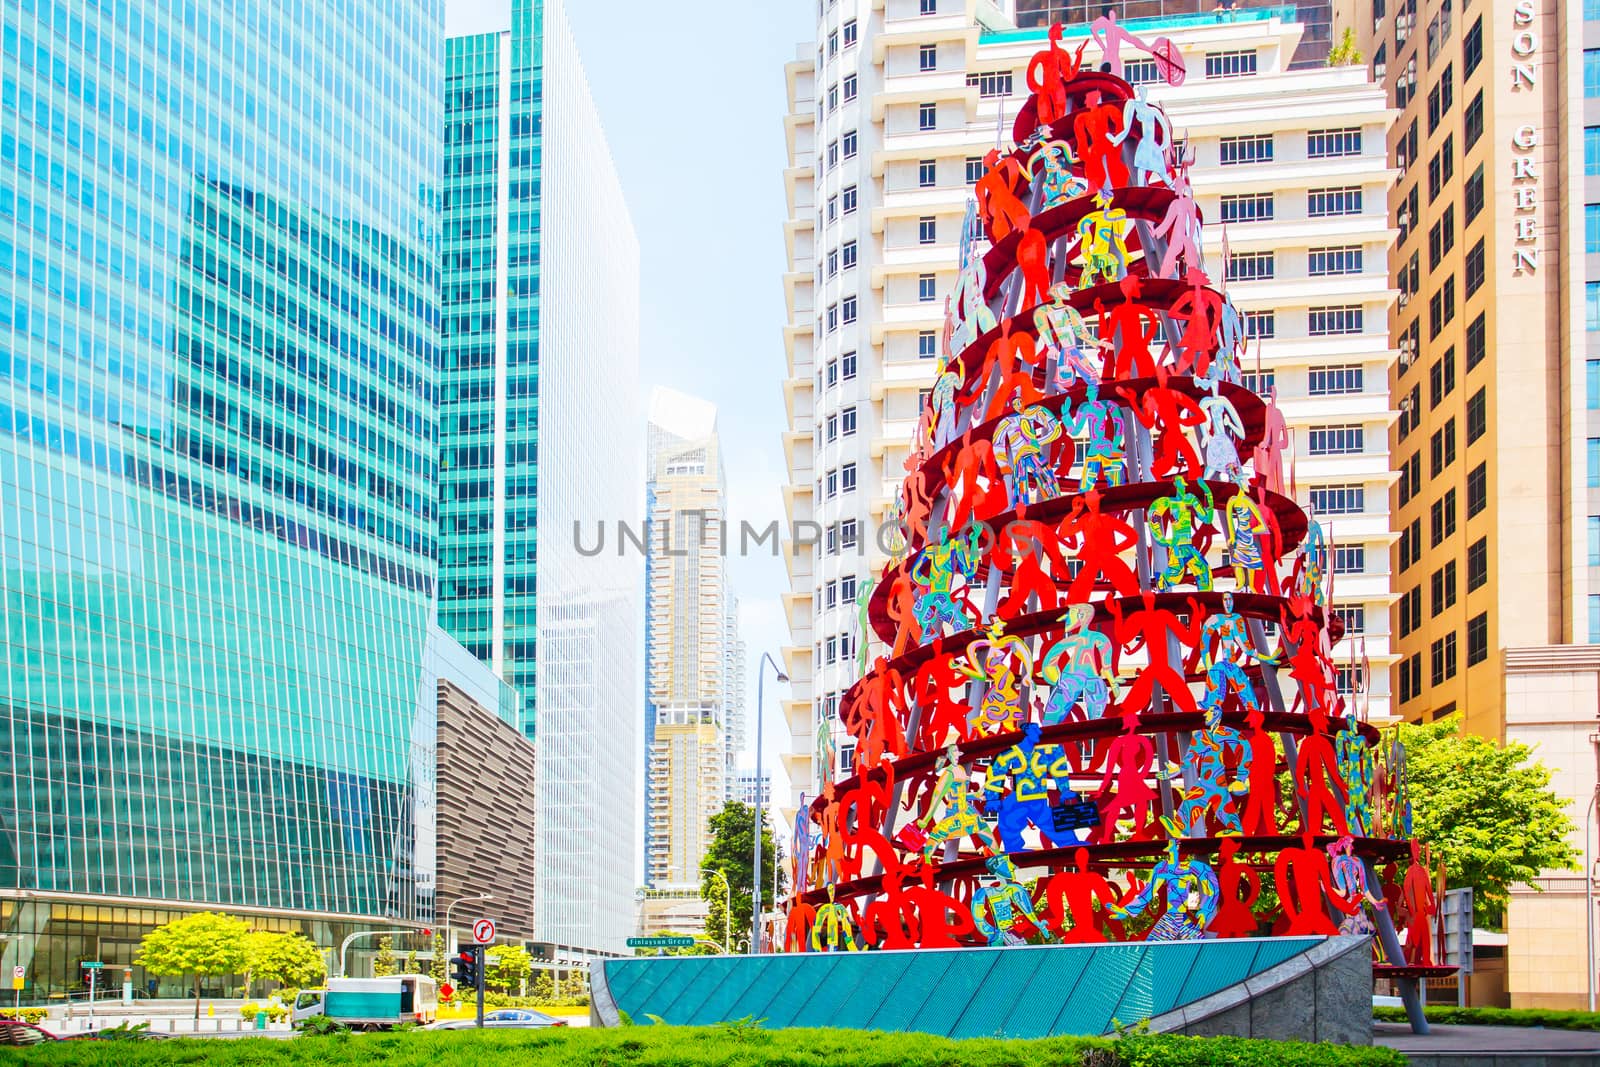 Singapore CBD, Singapore - June 21 2015: Singapore Momentum Sculpture located at the triangle traffic junction of Marina Blvd and Raffles Quay